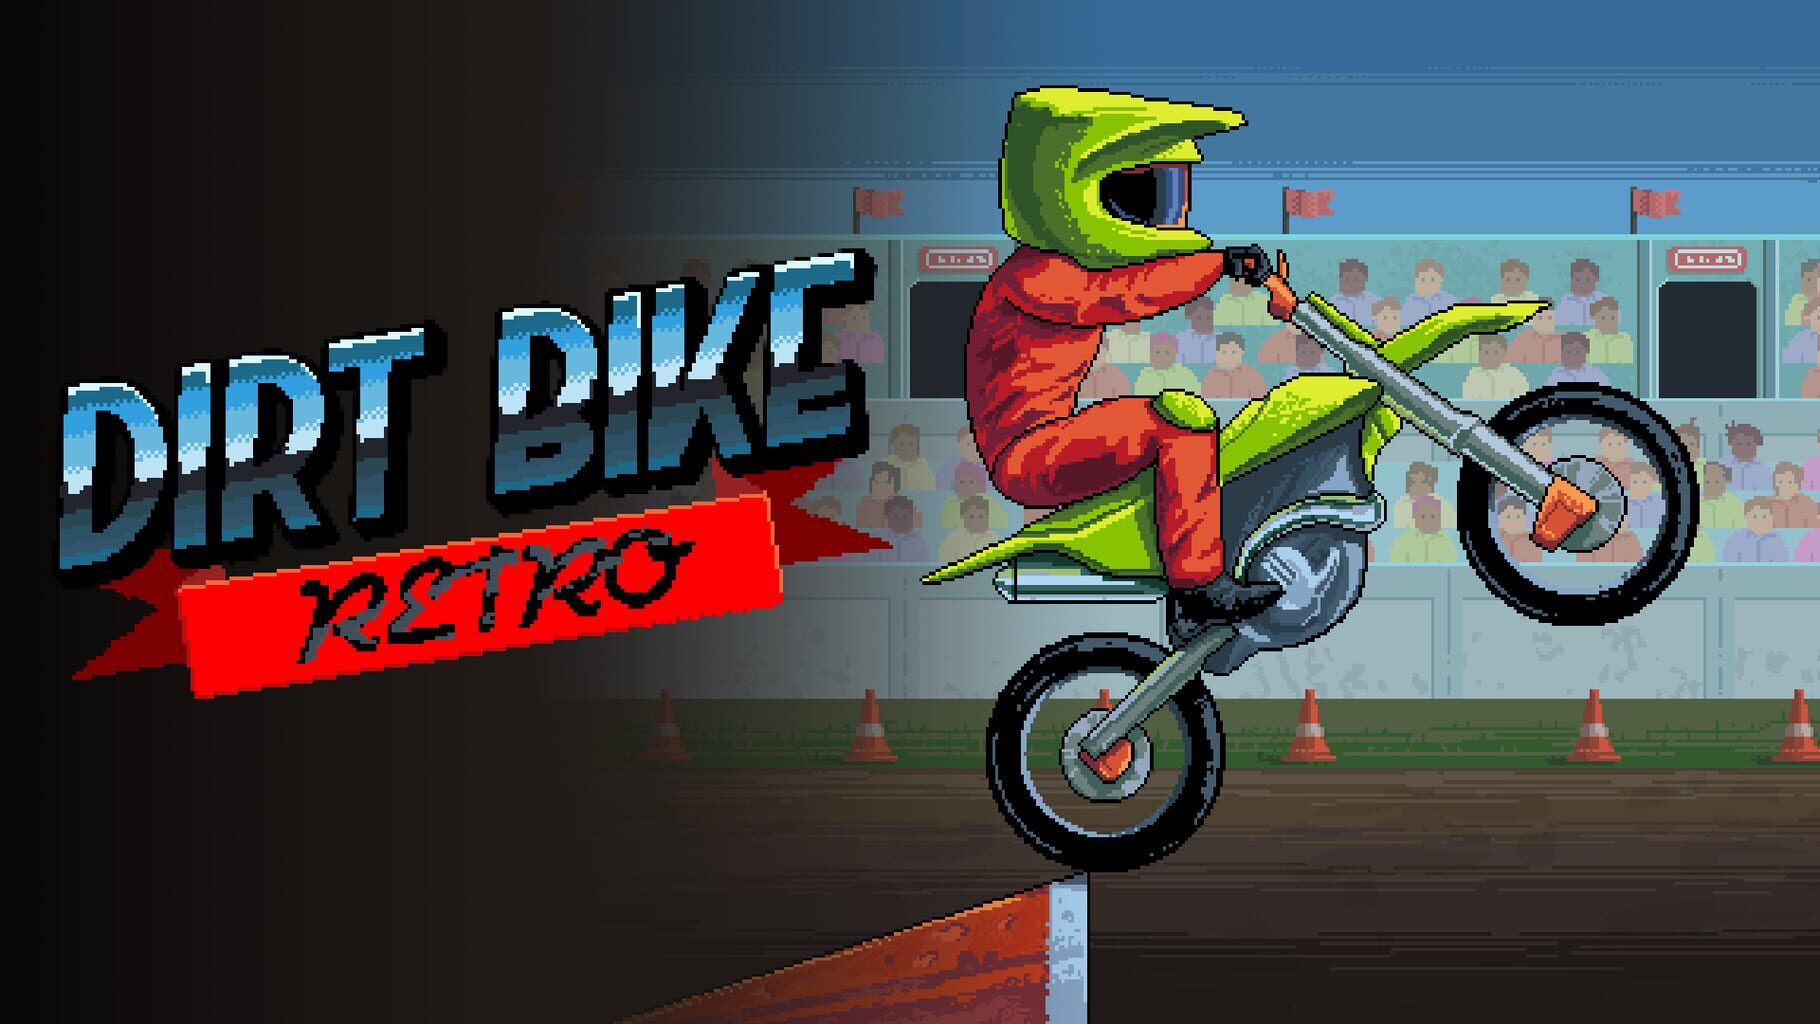 Dirt Bike Retro artwork